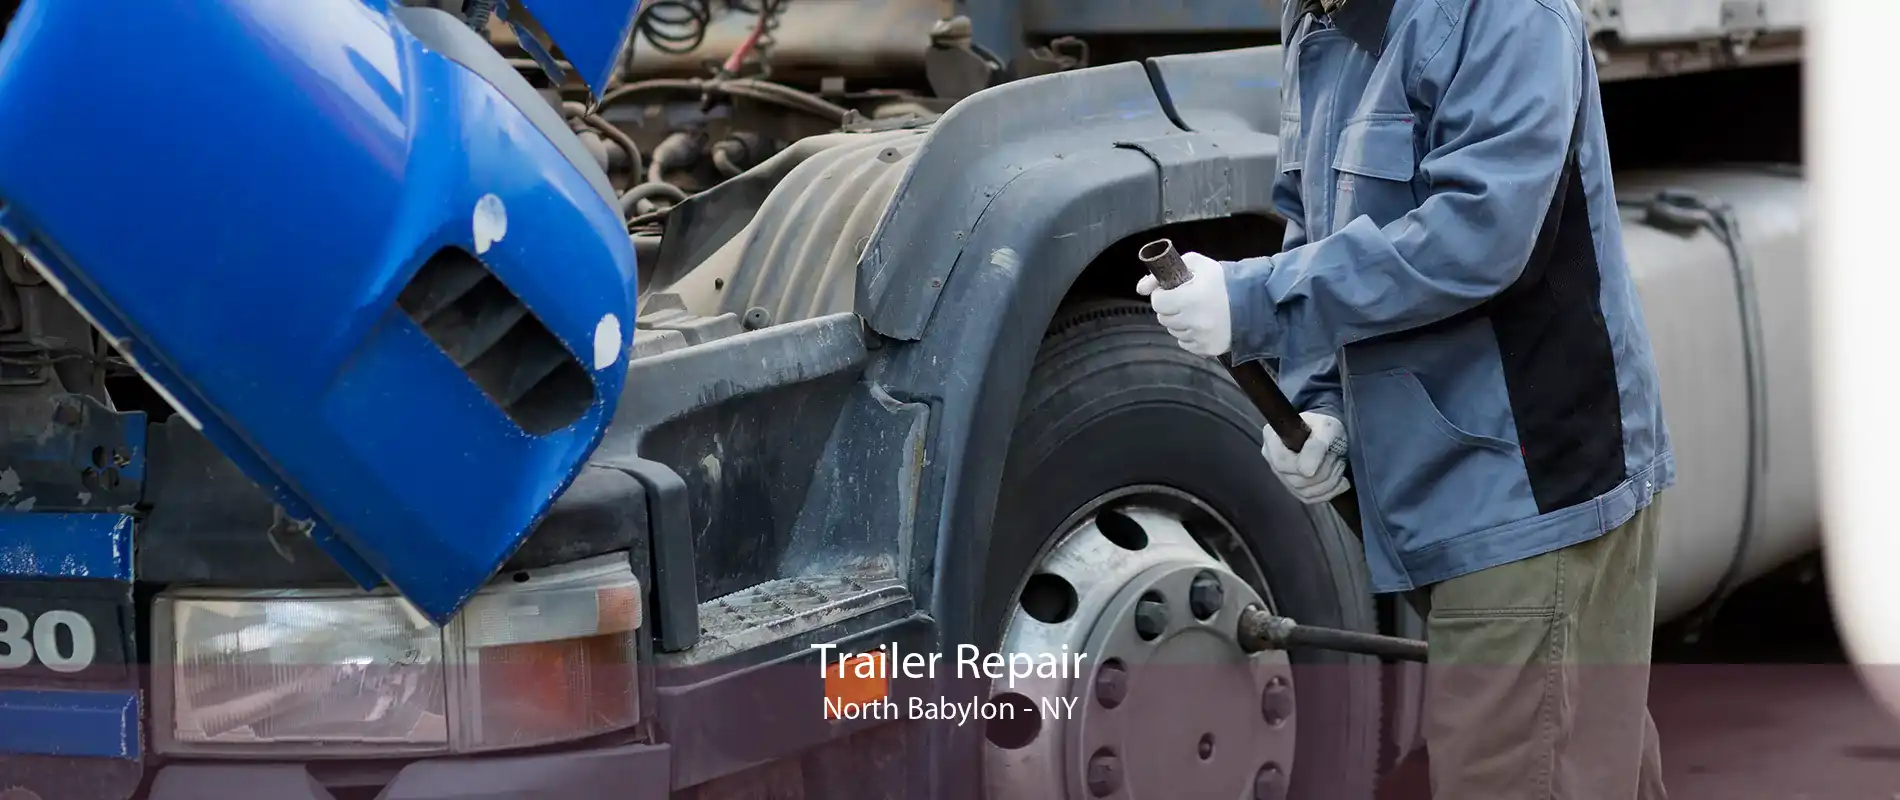 Trailer Repair North Babylon - NY